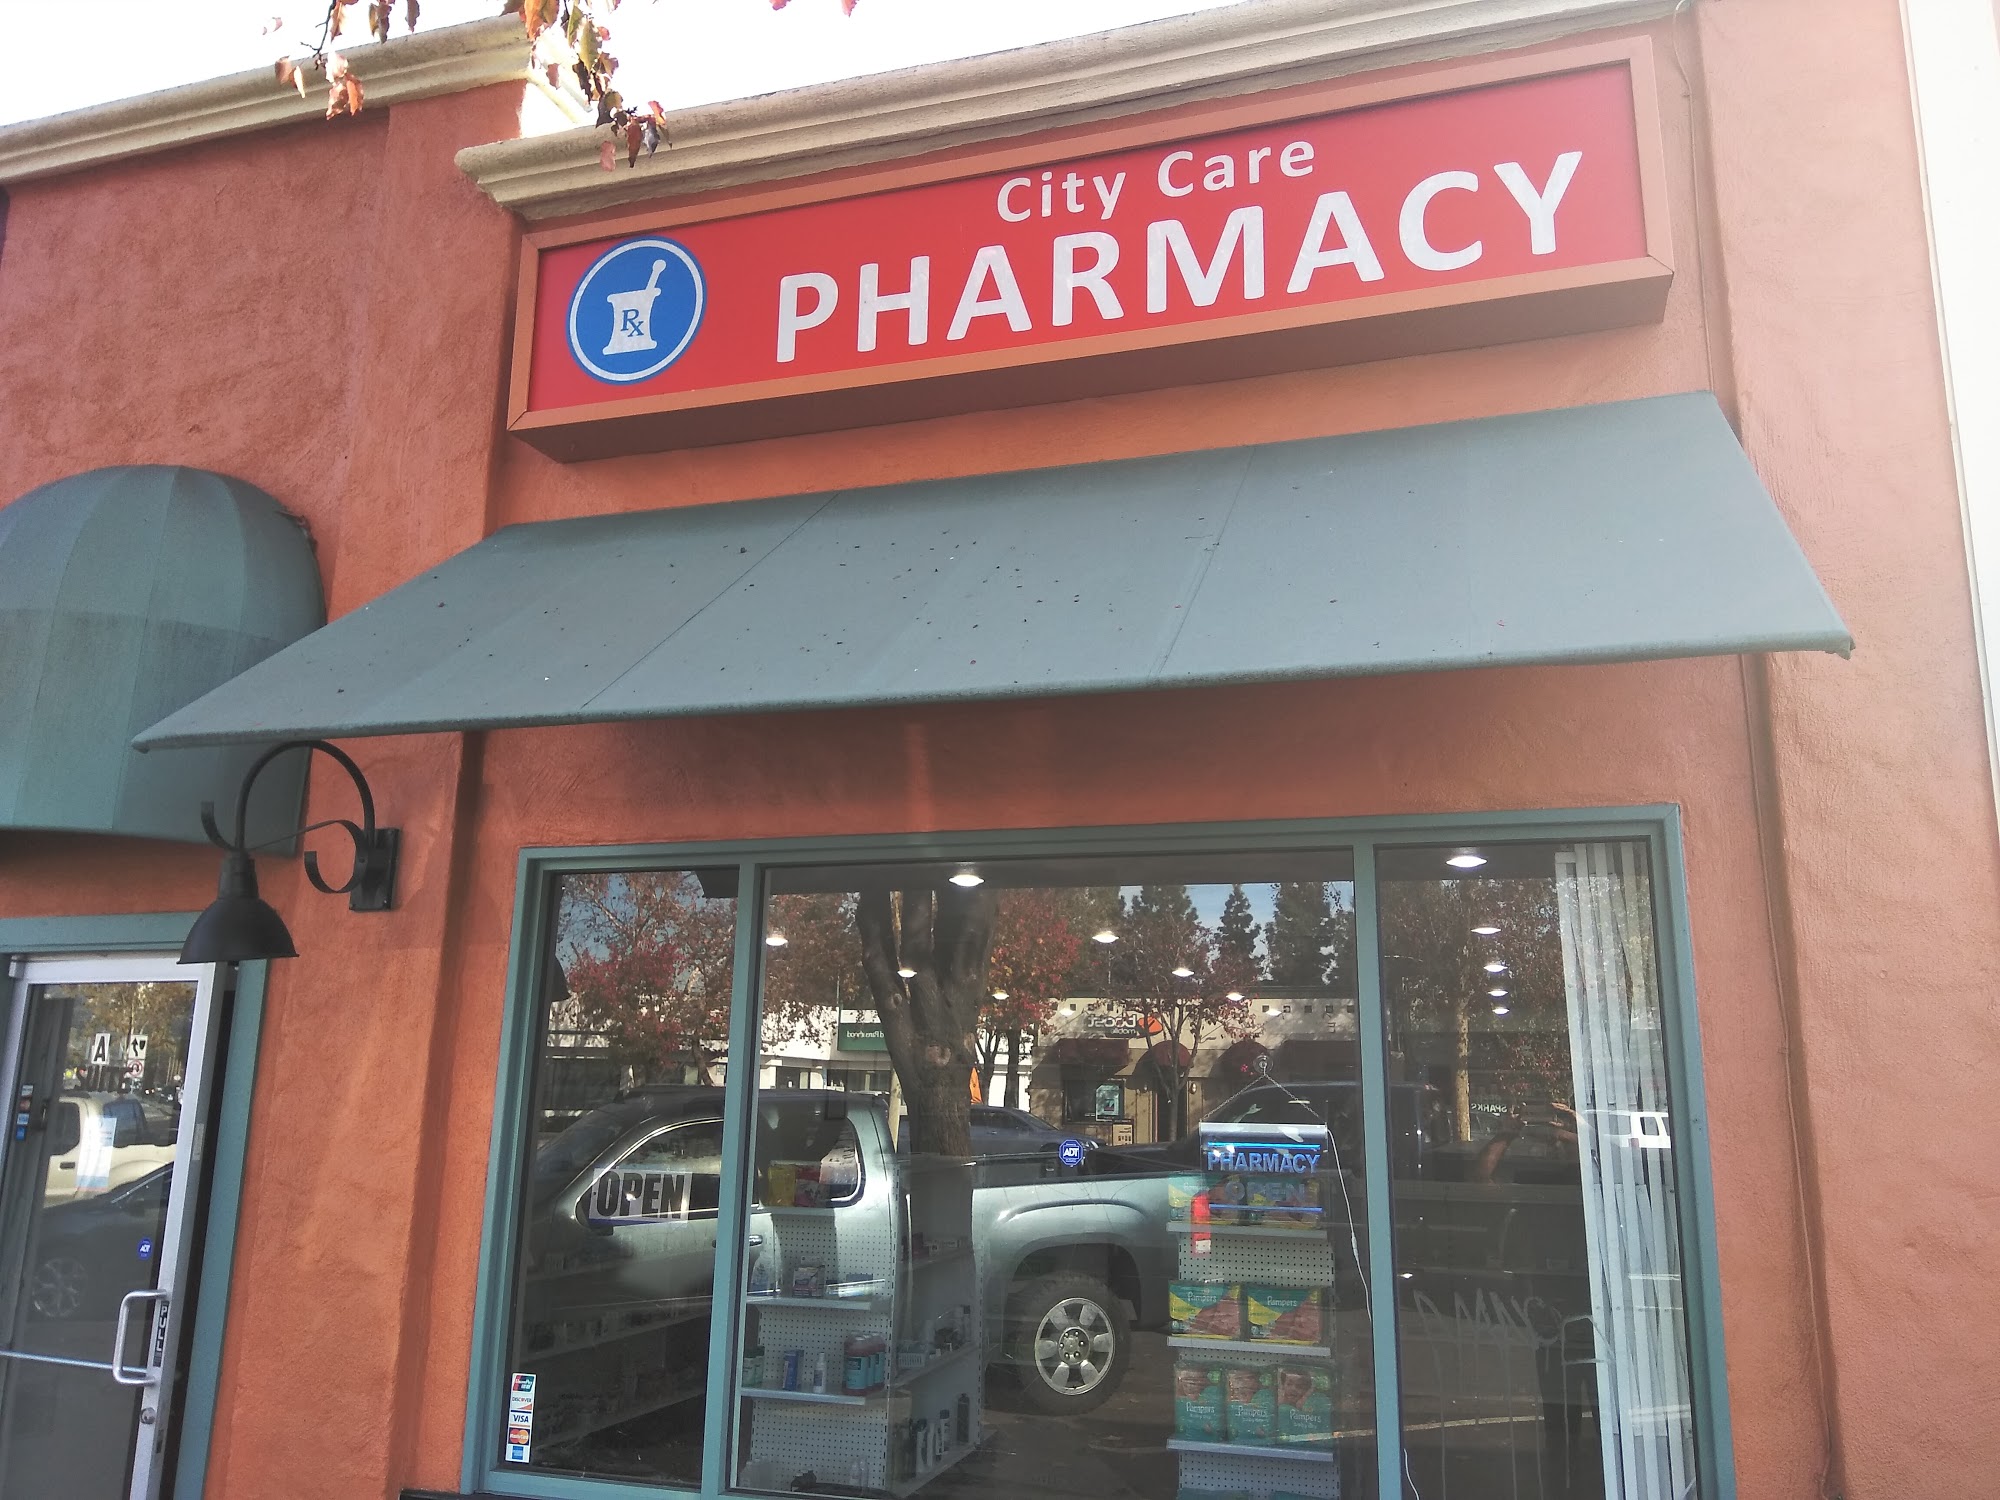 City Care Pharmacy